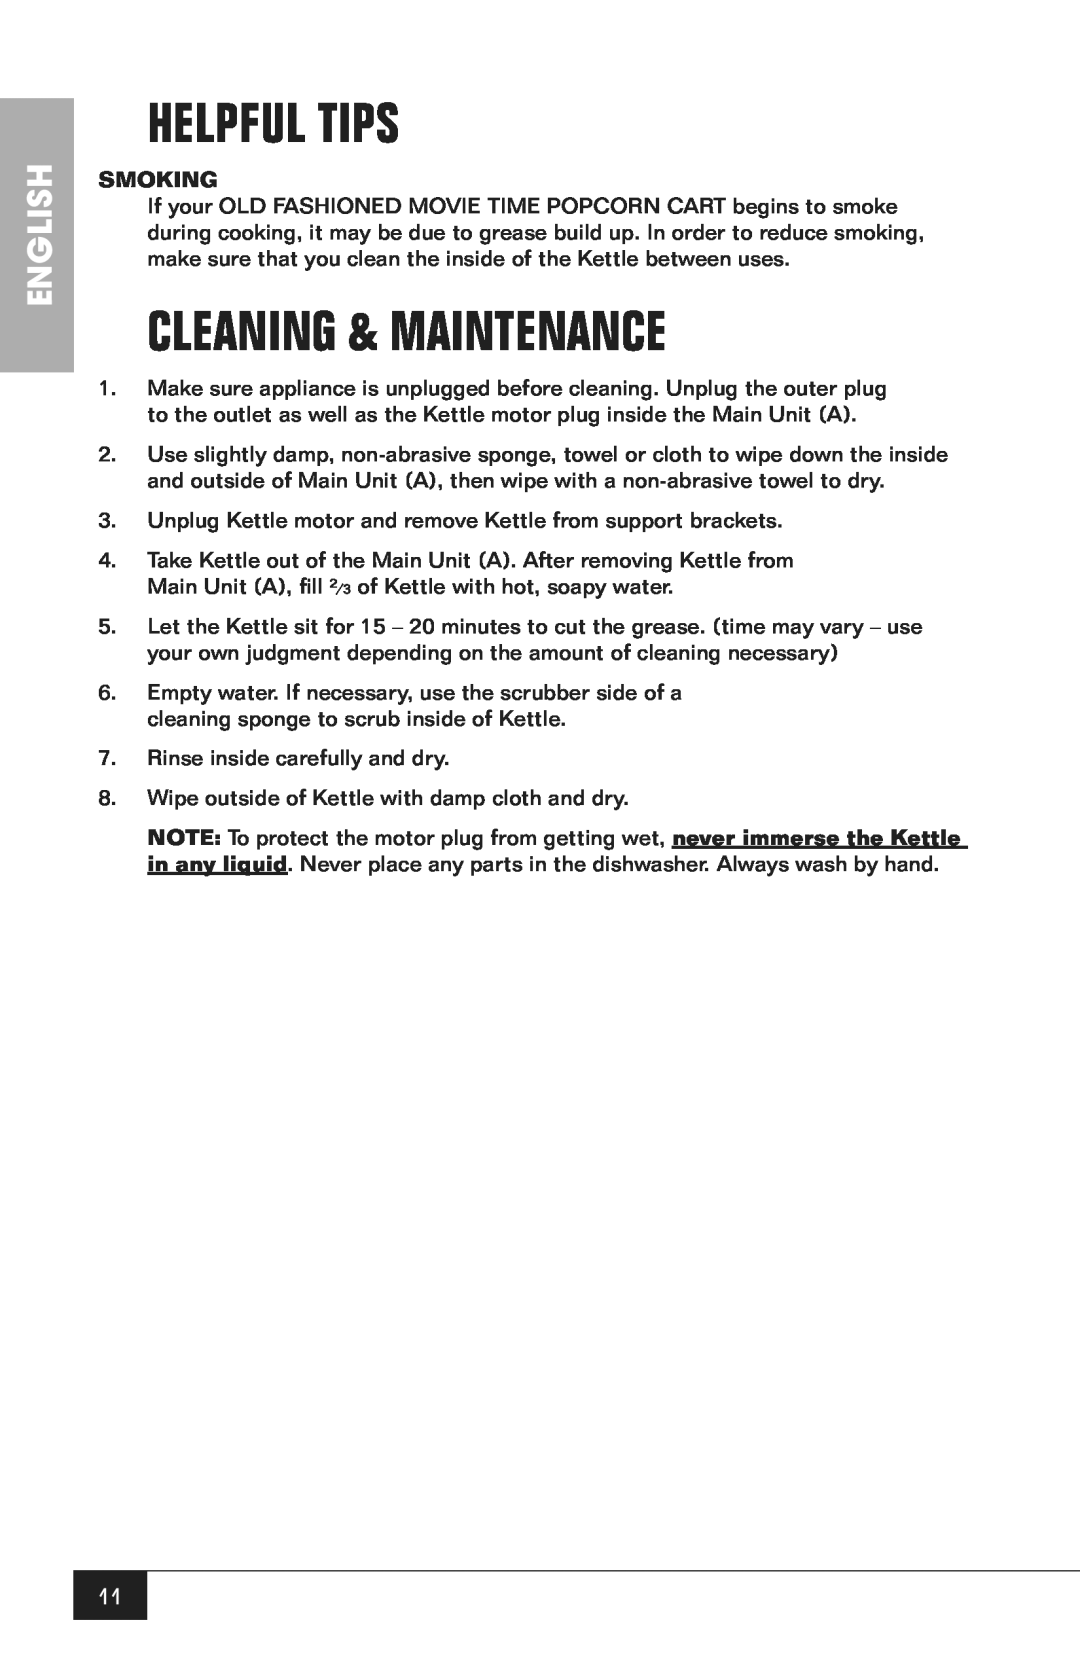 Nostalgia Electrics CCP200 manual Helpful Tips, Cleaning & Maintenance, English, Smoking 